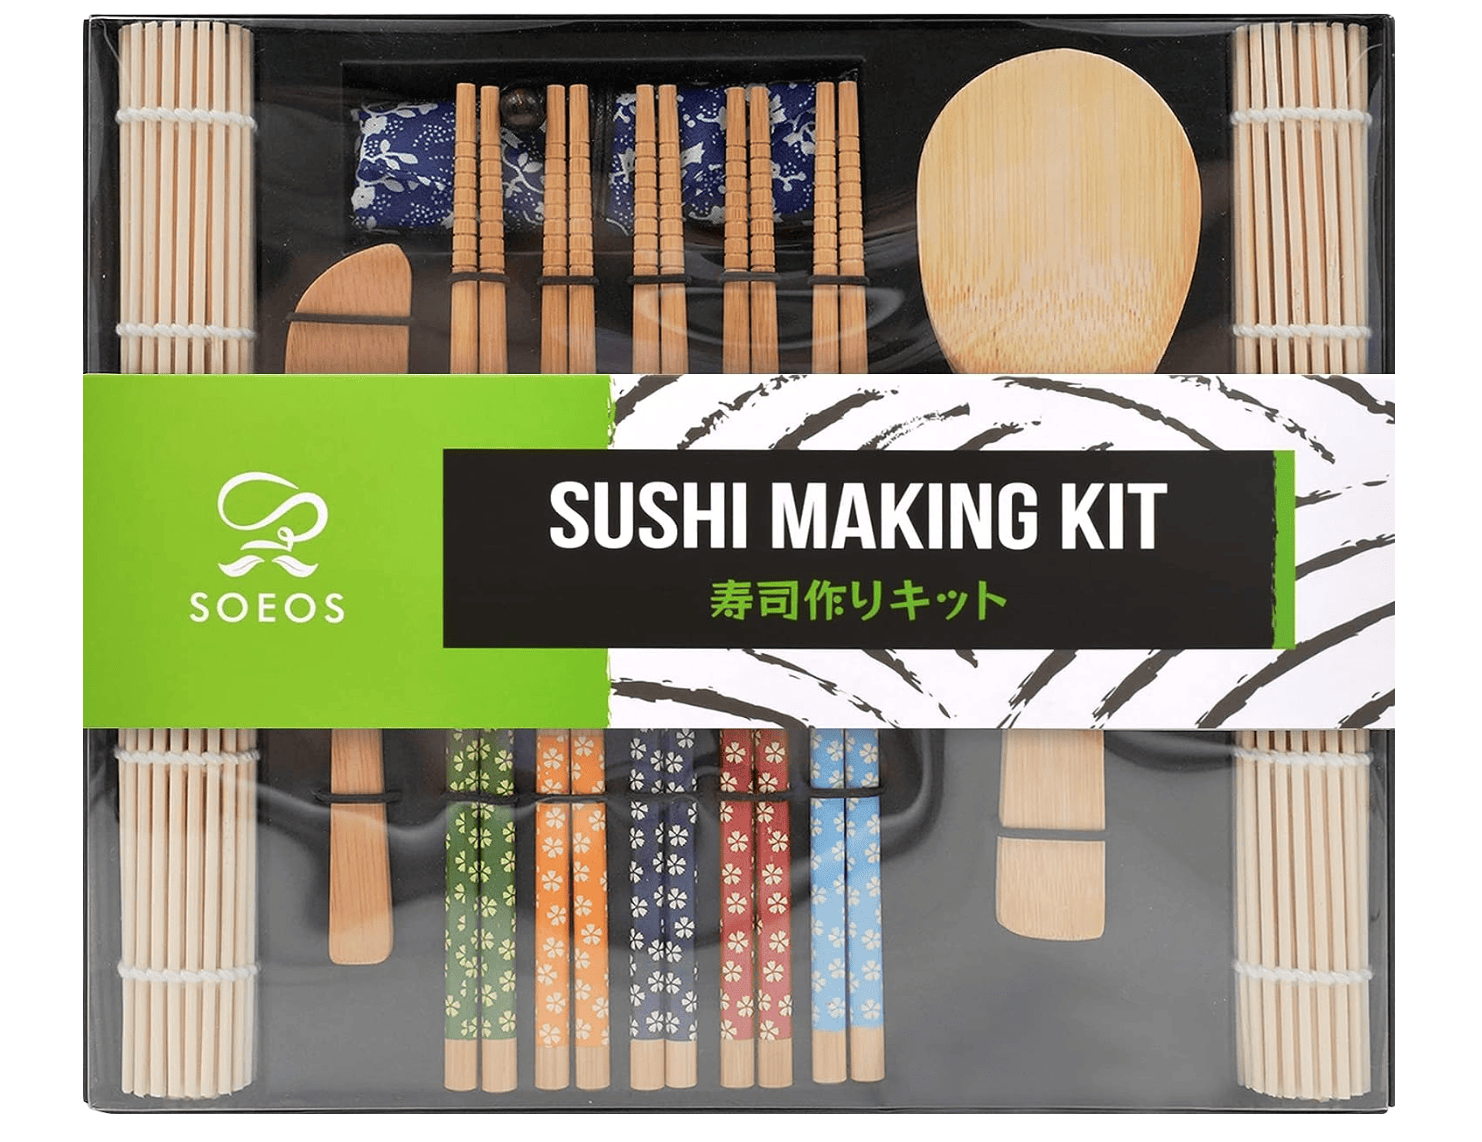 Bamboo Sushi Making Kit with 2 Sushi Rolling Mats, 5 Pairs of